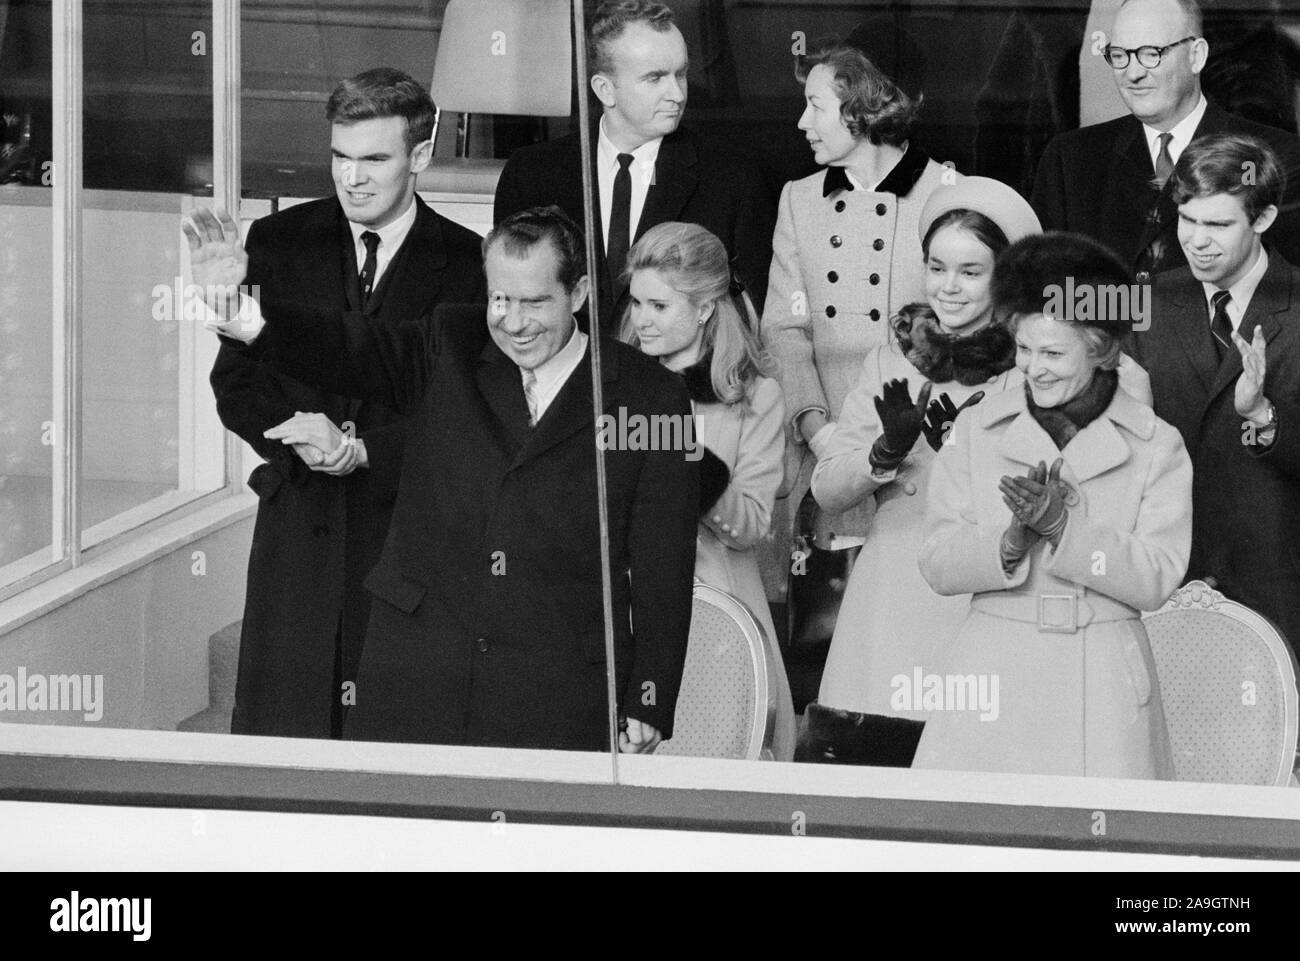 U.S. President Richard Nixon and First Lady Pat Nixon with Family and Dignitaries watching Presidential Inauguration Event, Washington, D.C., USA, photograph by Thomas J. O'Halloran, January 20, 1969 Stock Photo